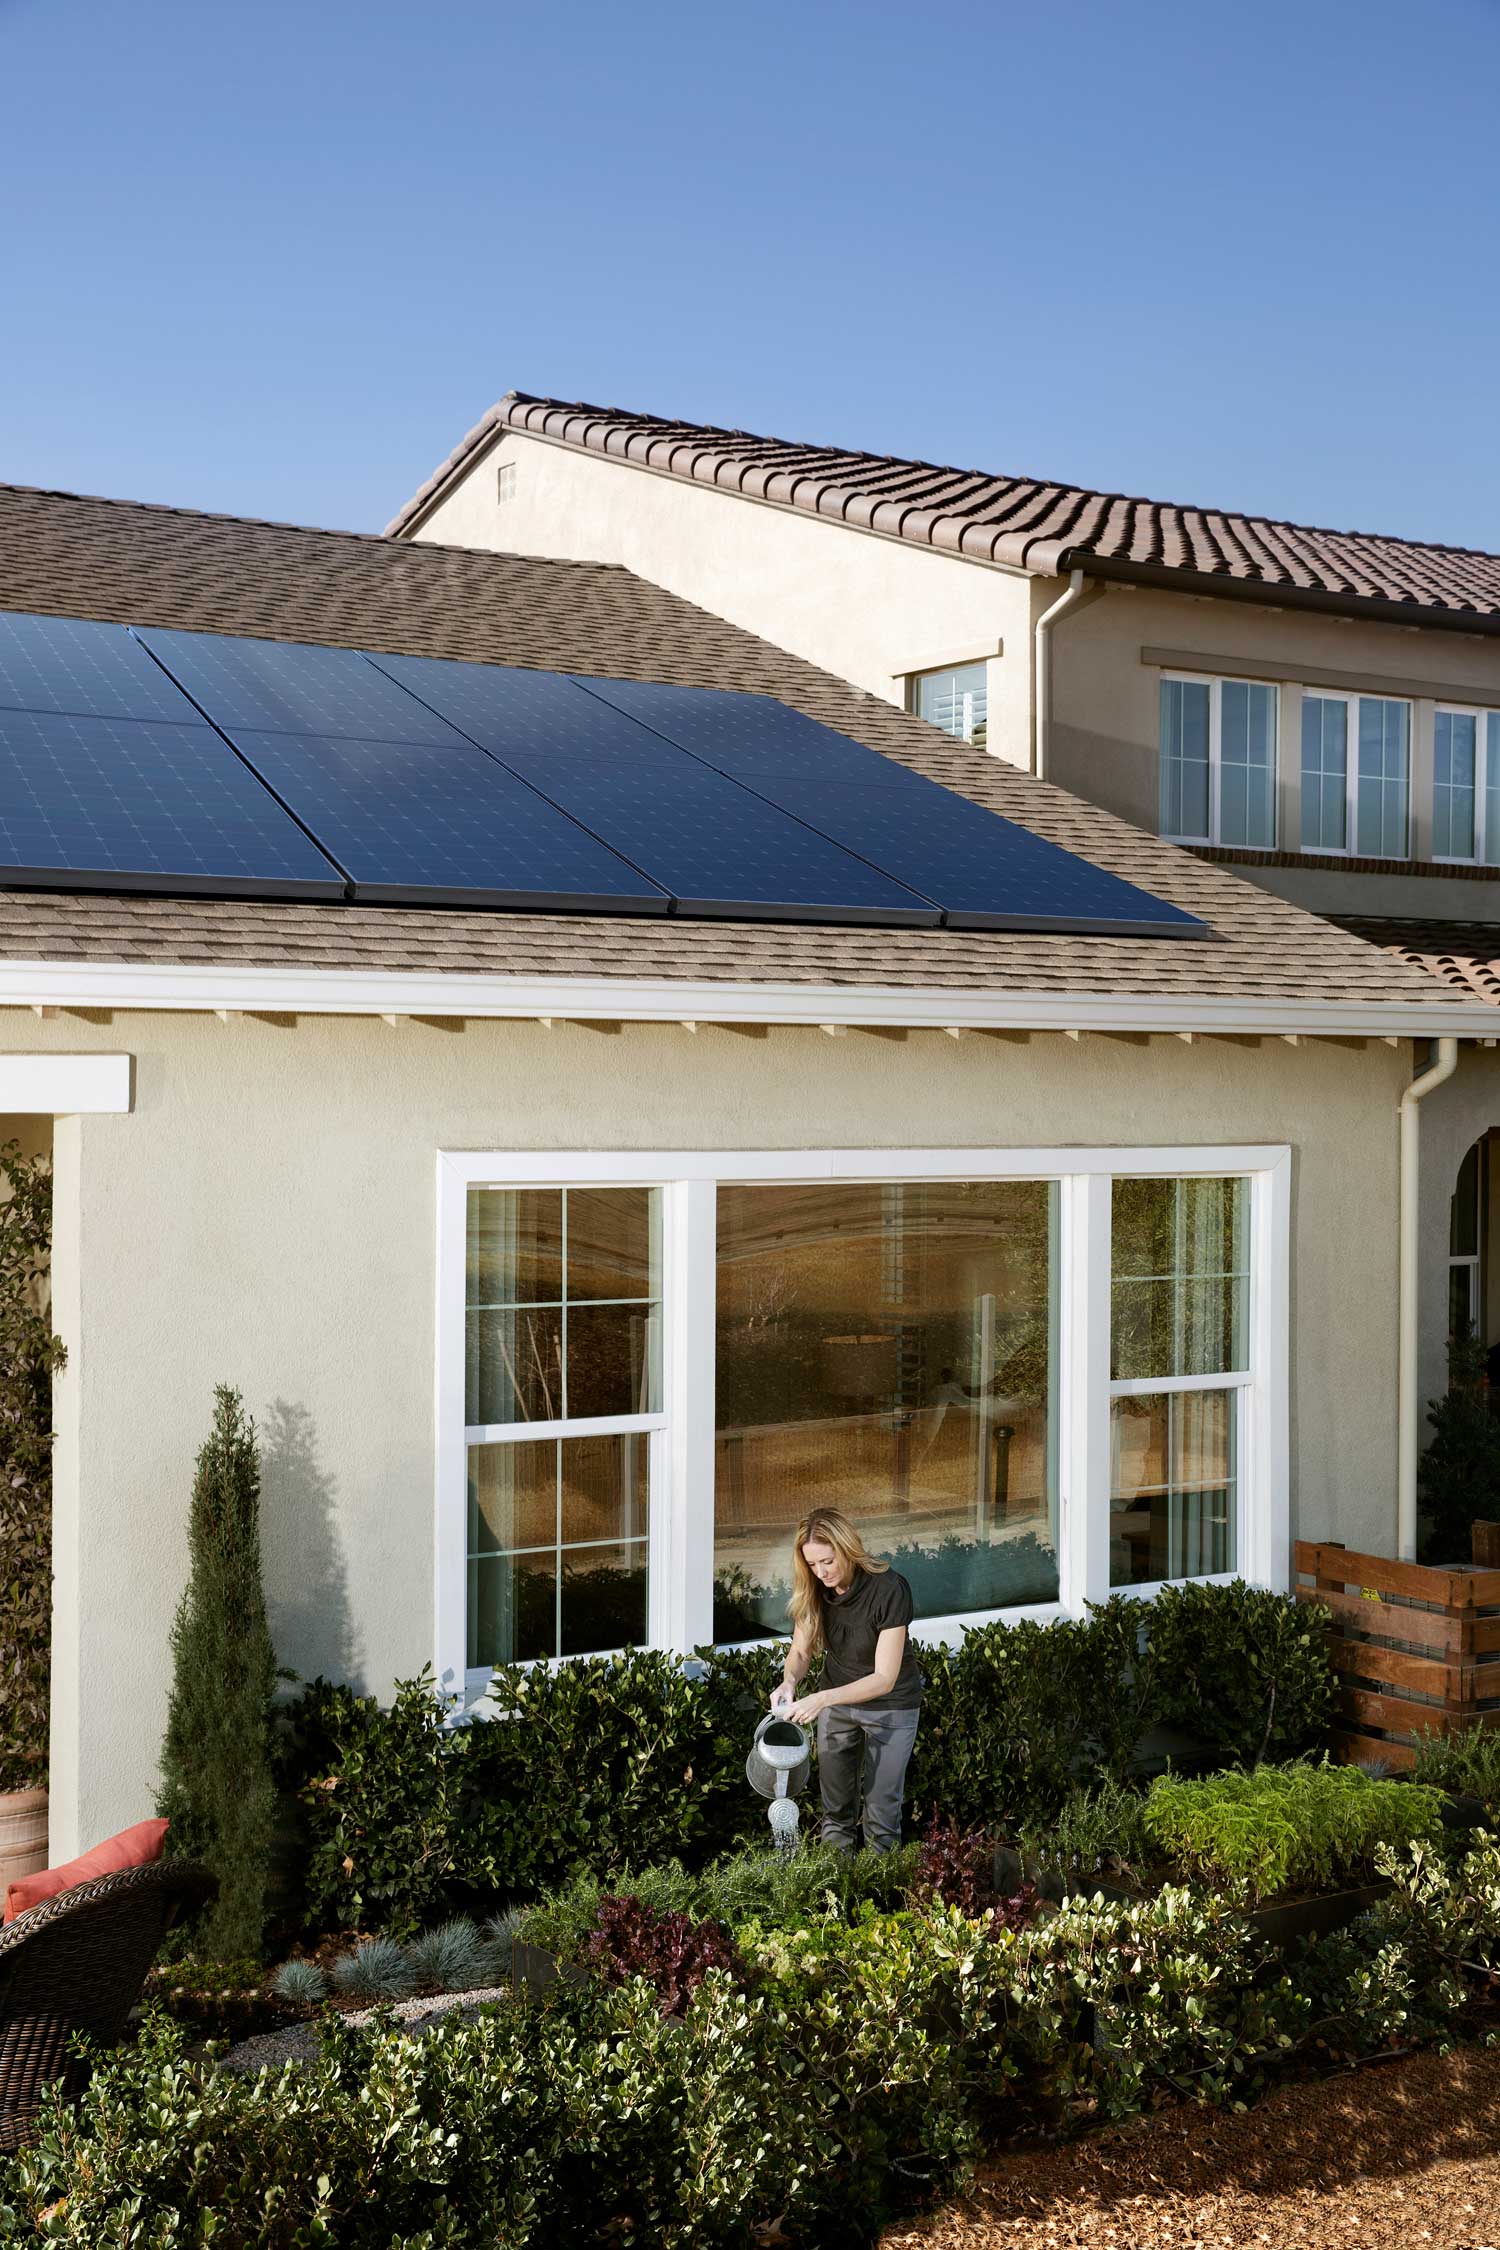 How can solar energy be used in Ephraim in a beautiful home like this? SunPower by Custom Energy shares ideas.